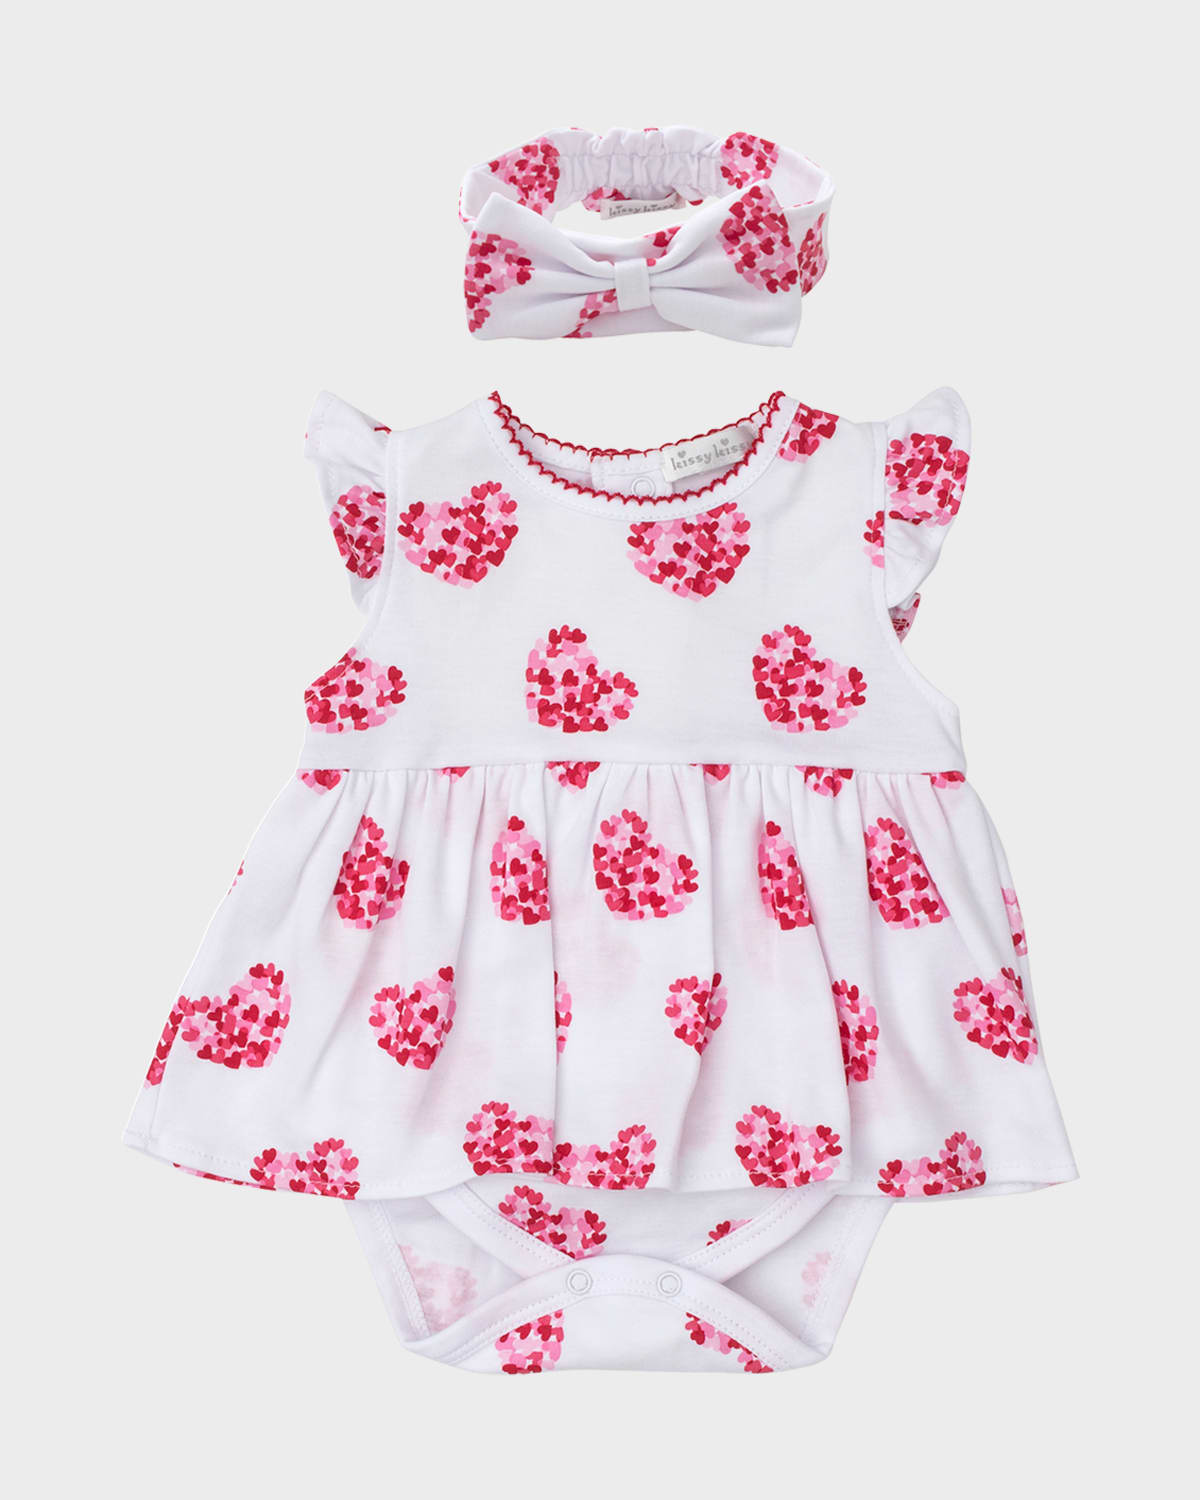 Girl's Heart of Hearts Bodysuit Dress and Headband Set, Size 3M-24M